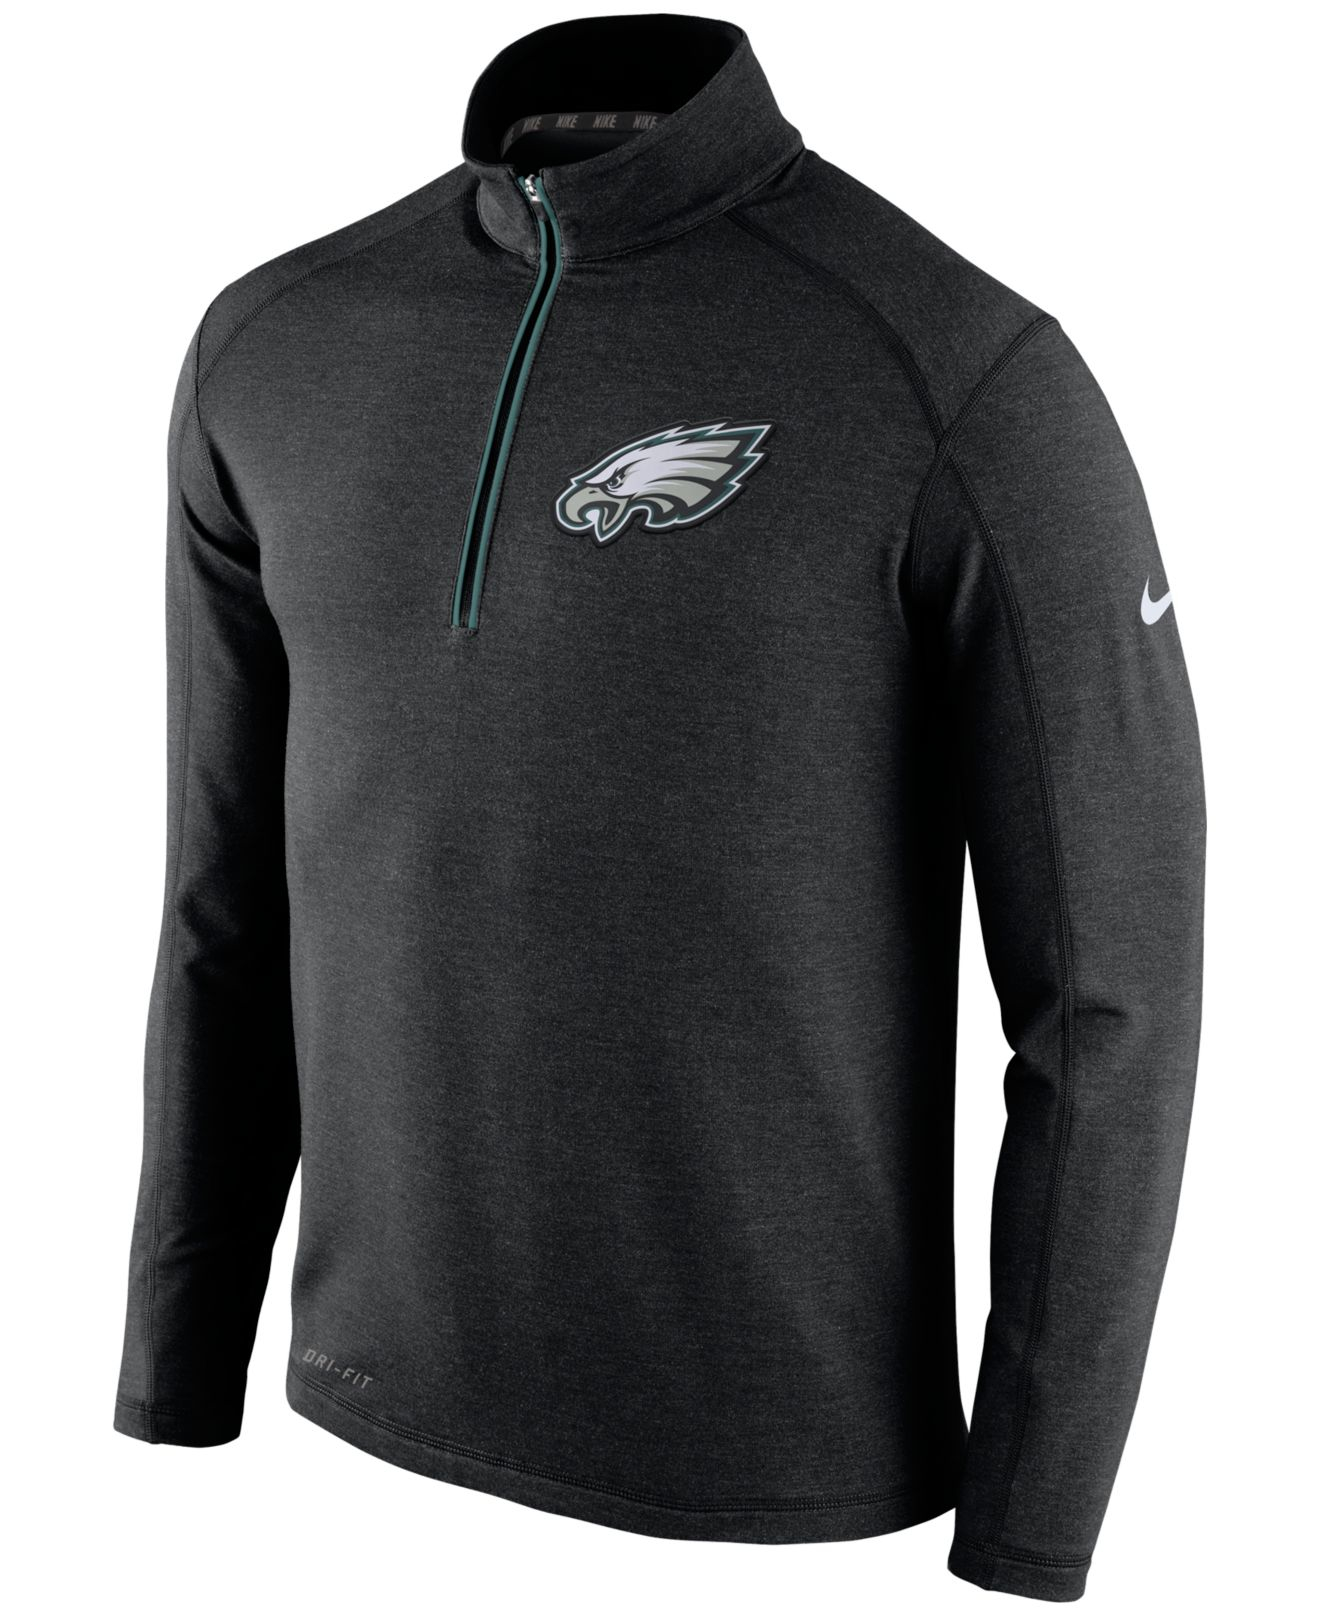 Lyst - Nike Men's Philadelphia Eagles Half-zip Dri-fit Jacket in Black ...